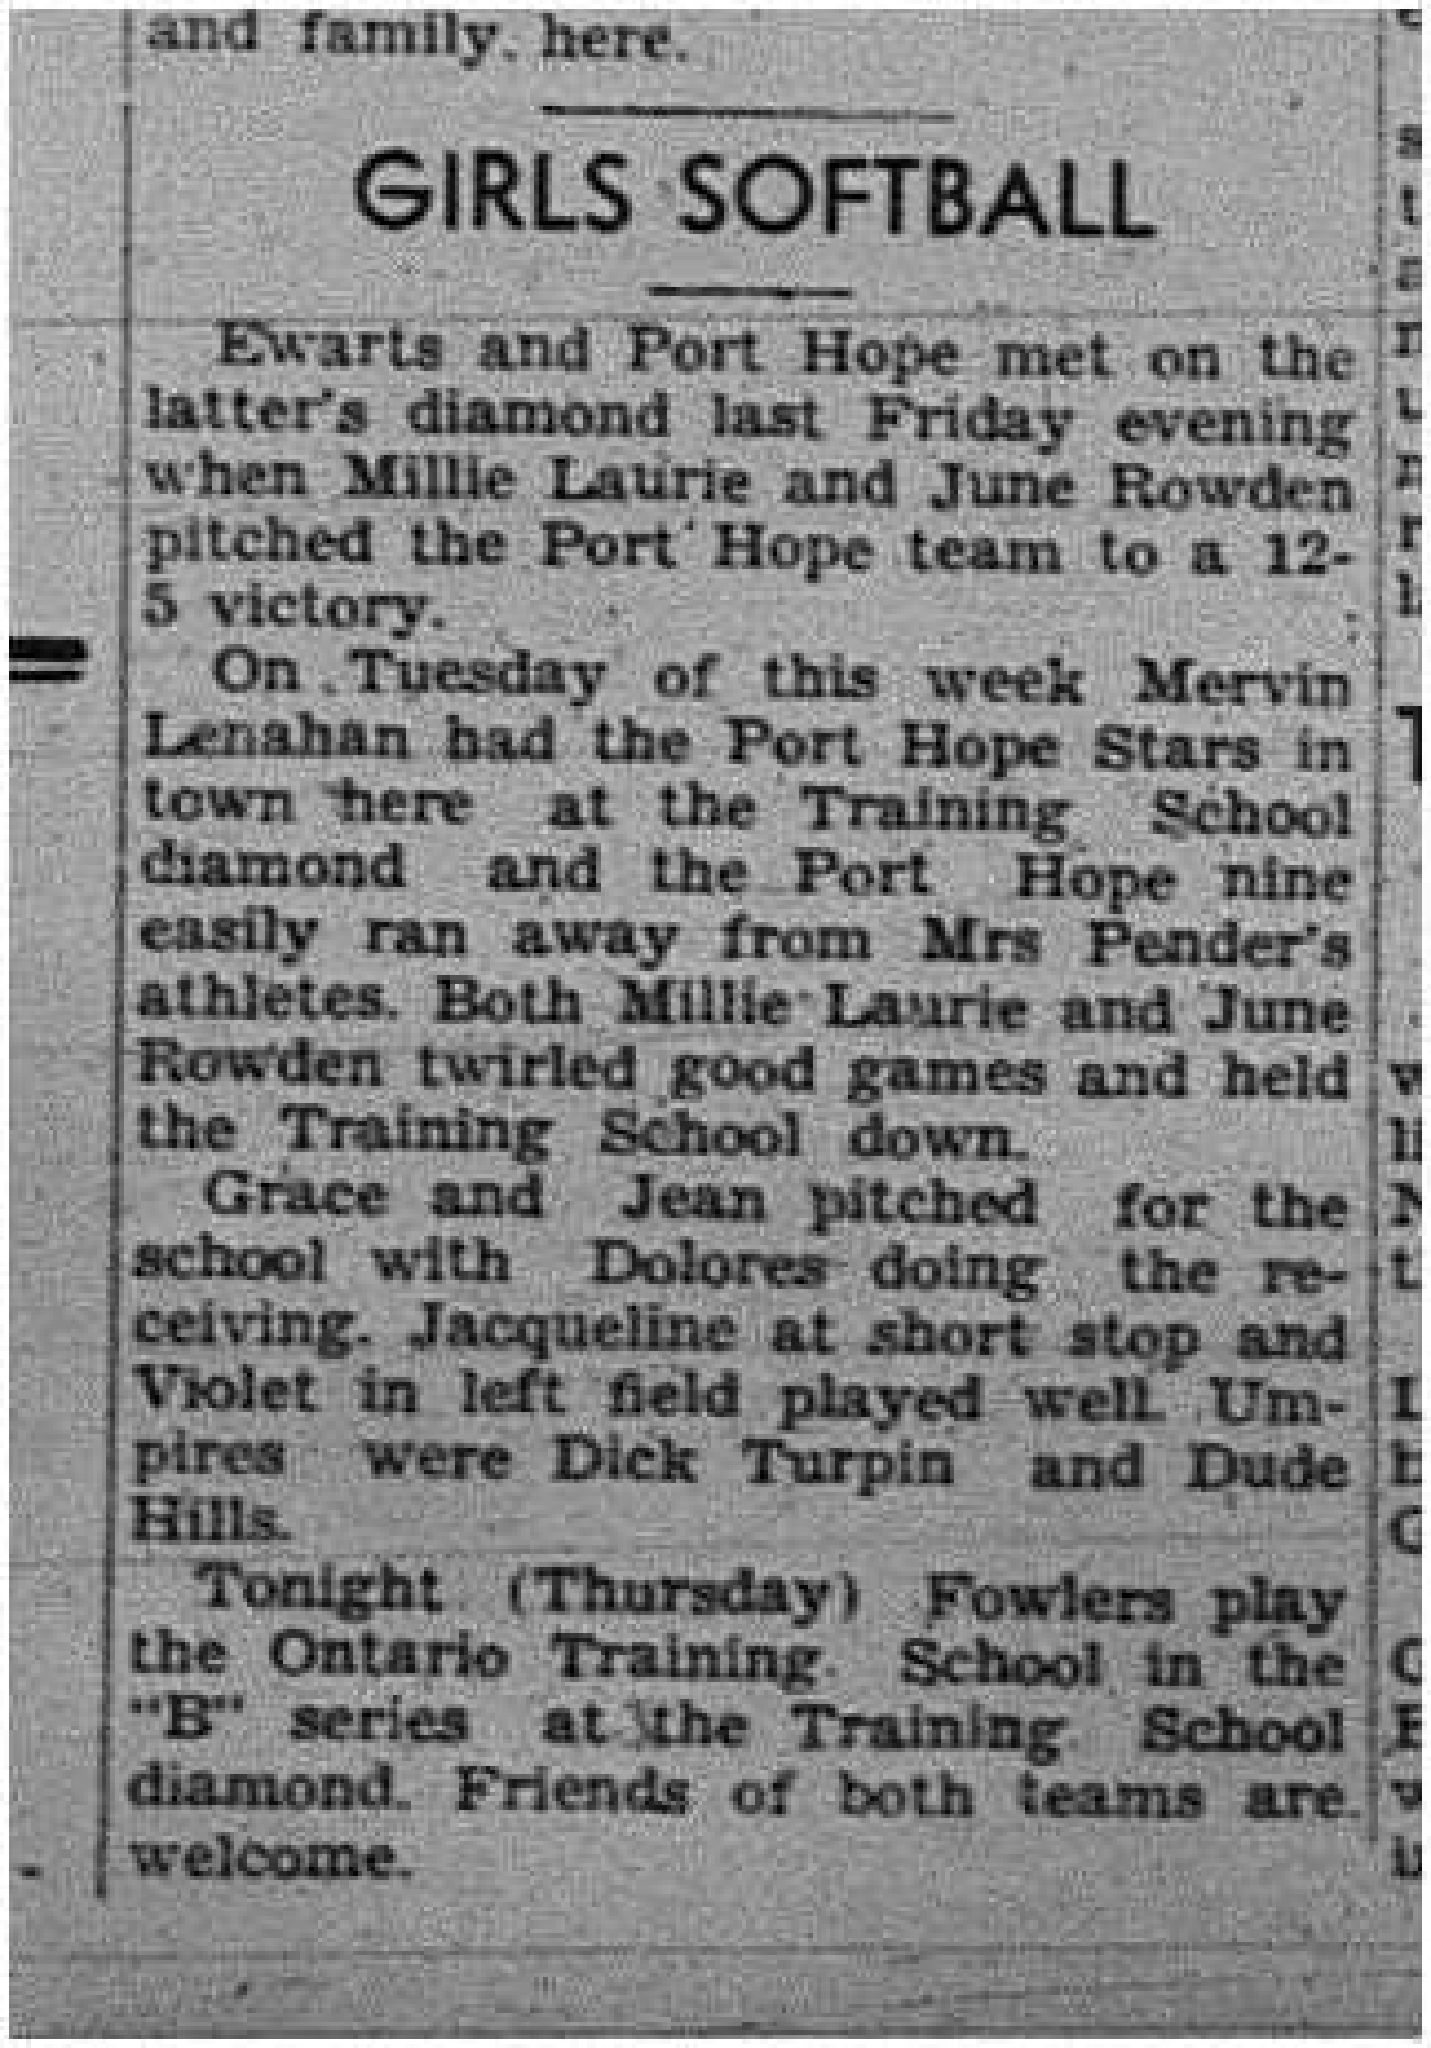 1945-06-14 Softball -Girls -Ewarts at PH